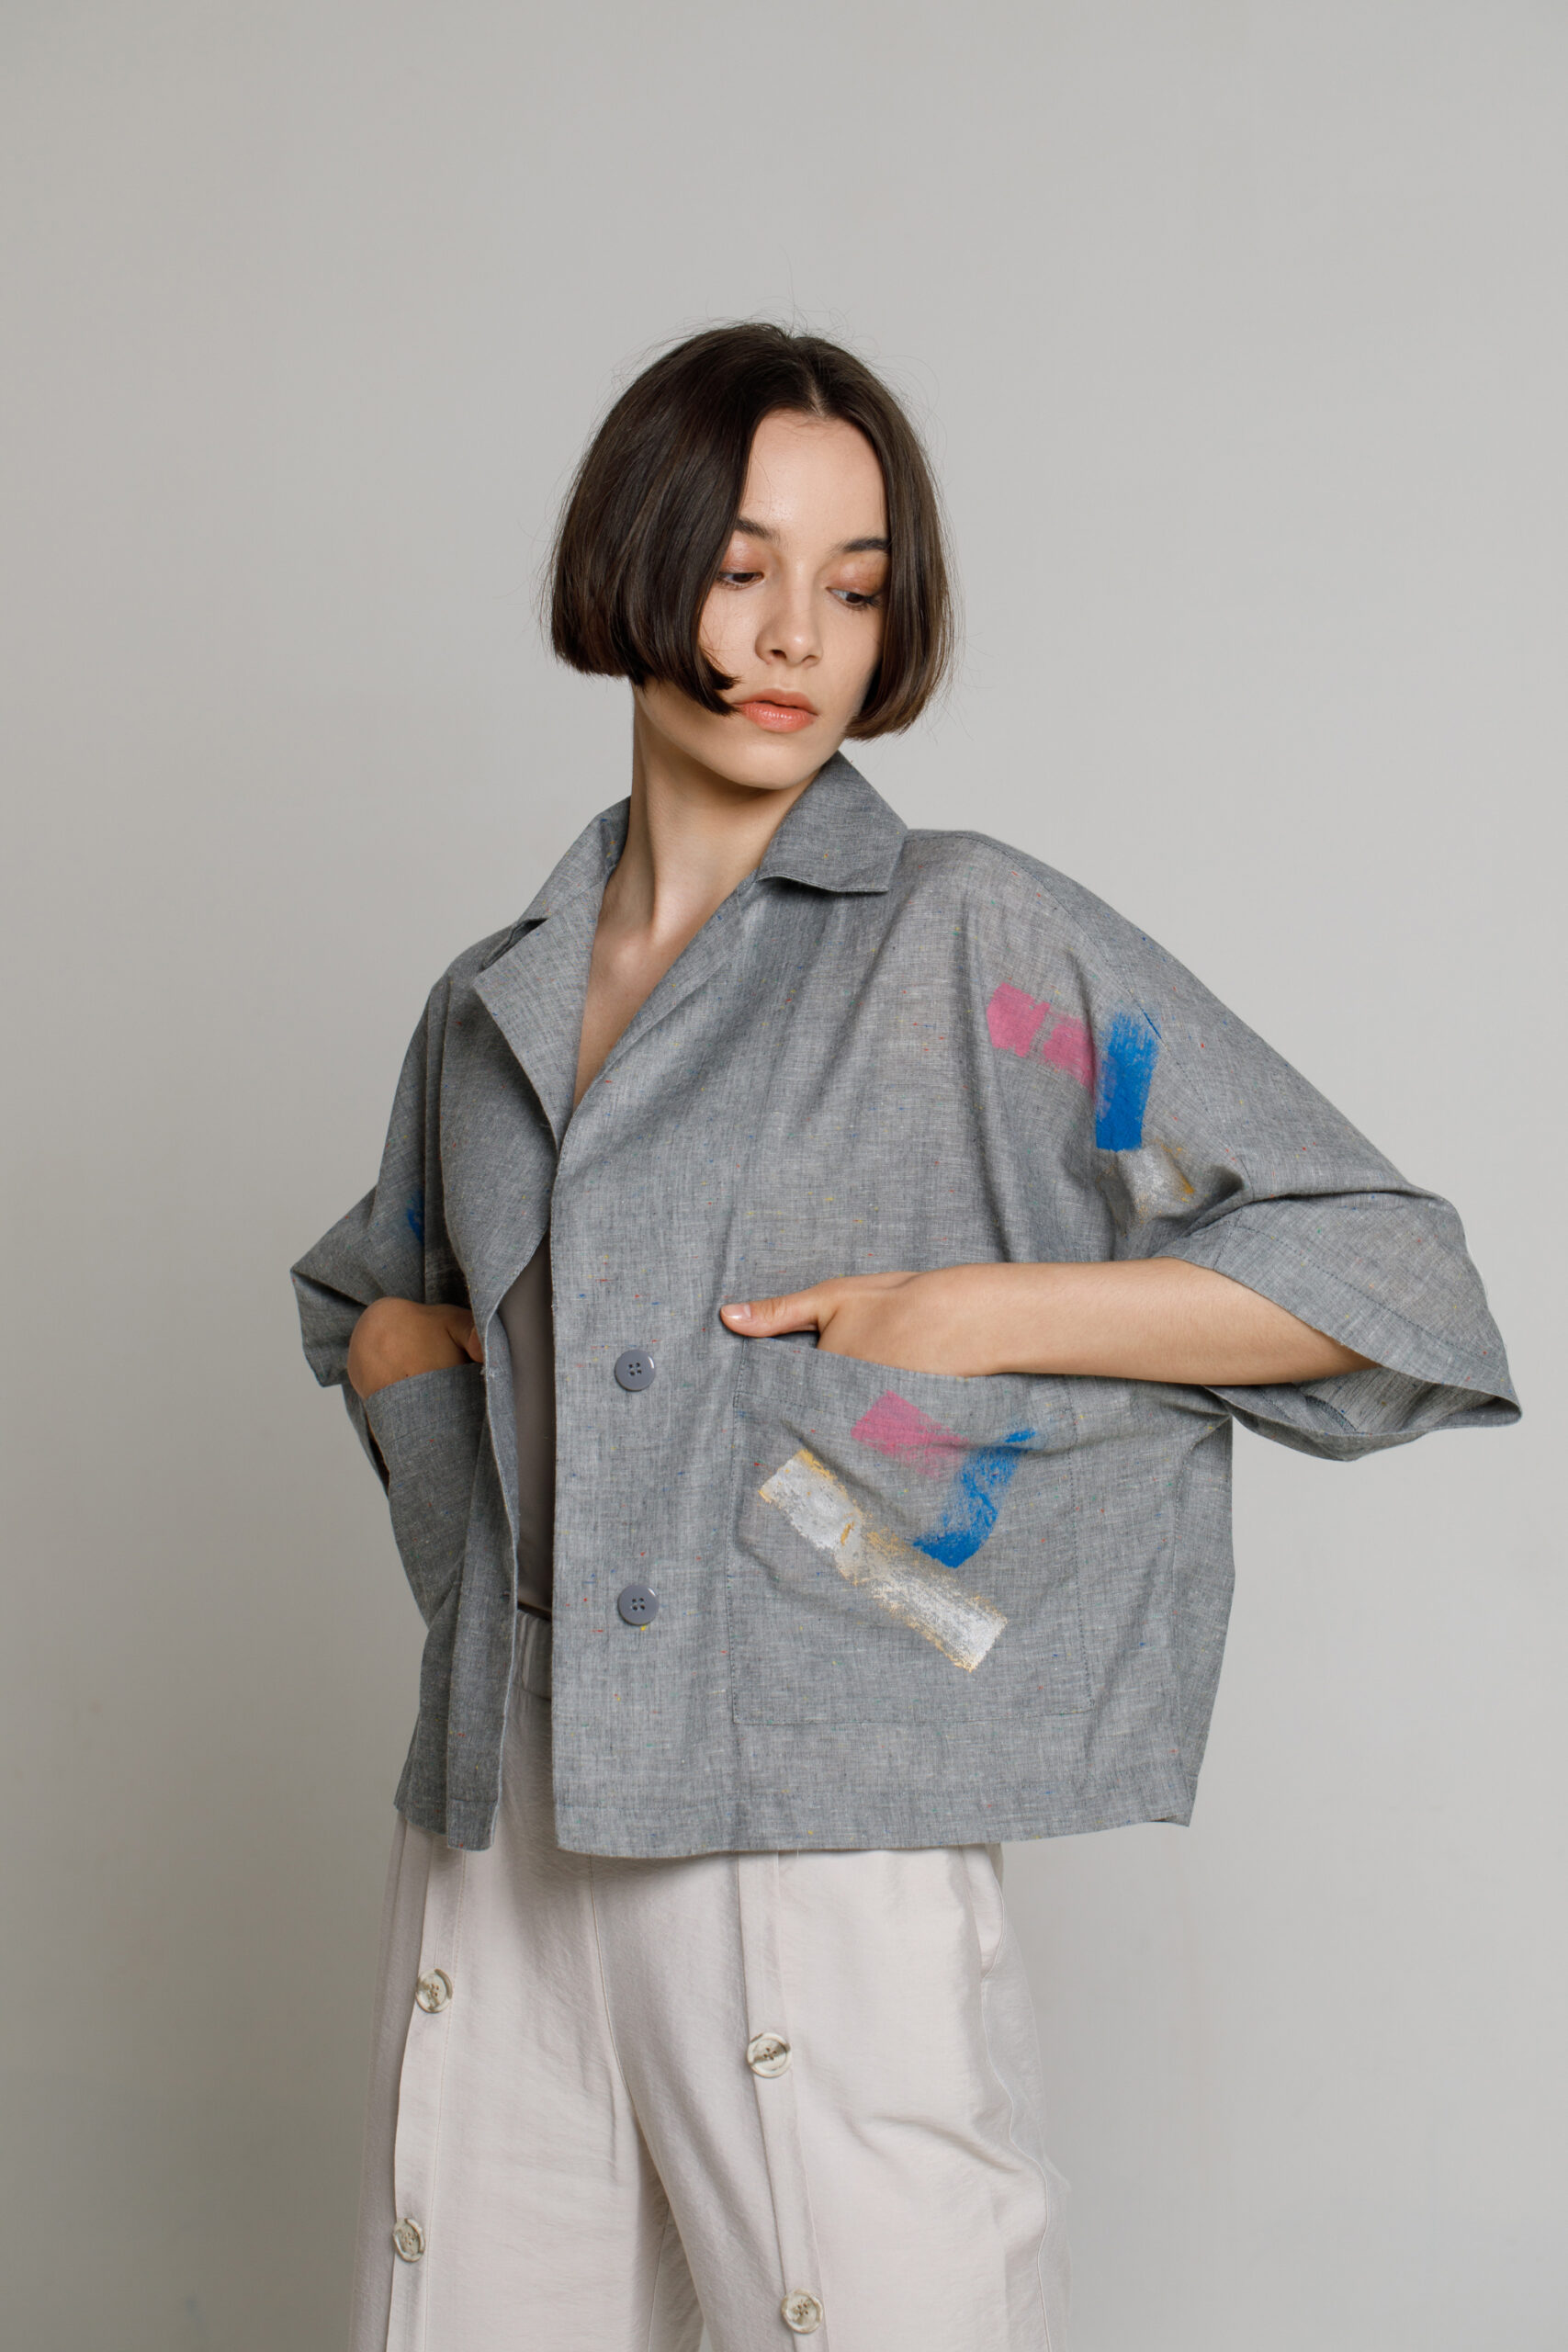 KIT casual gray hand-painted poplin jacket. Natural fabrics, original design, handmade embroidery